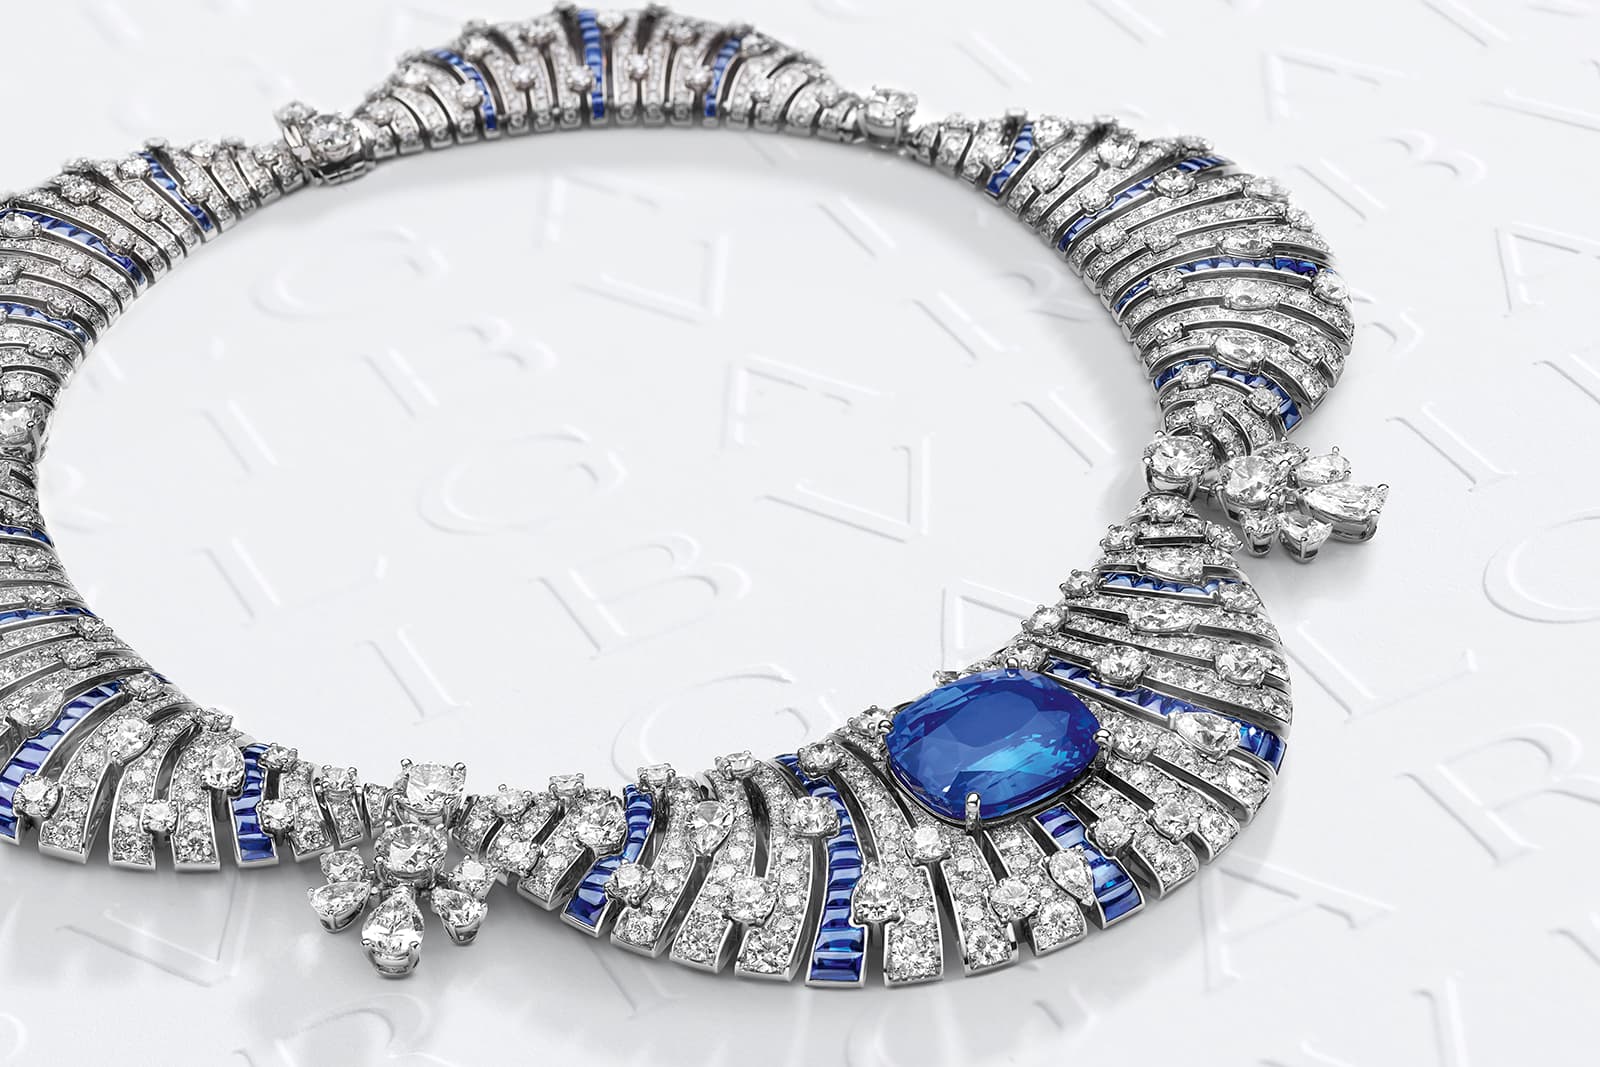 Bulgari Magnifica Sapphire Petal High Jewellery necklace with a 34.45 carat sapphire 